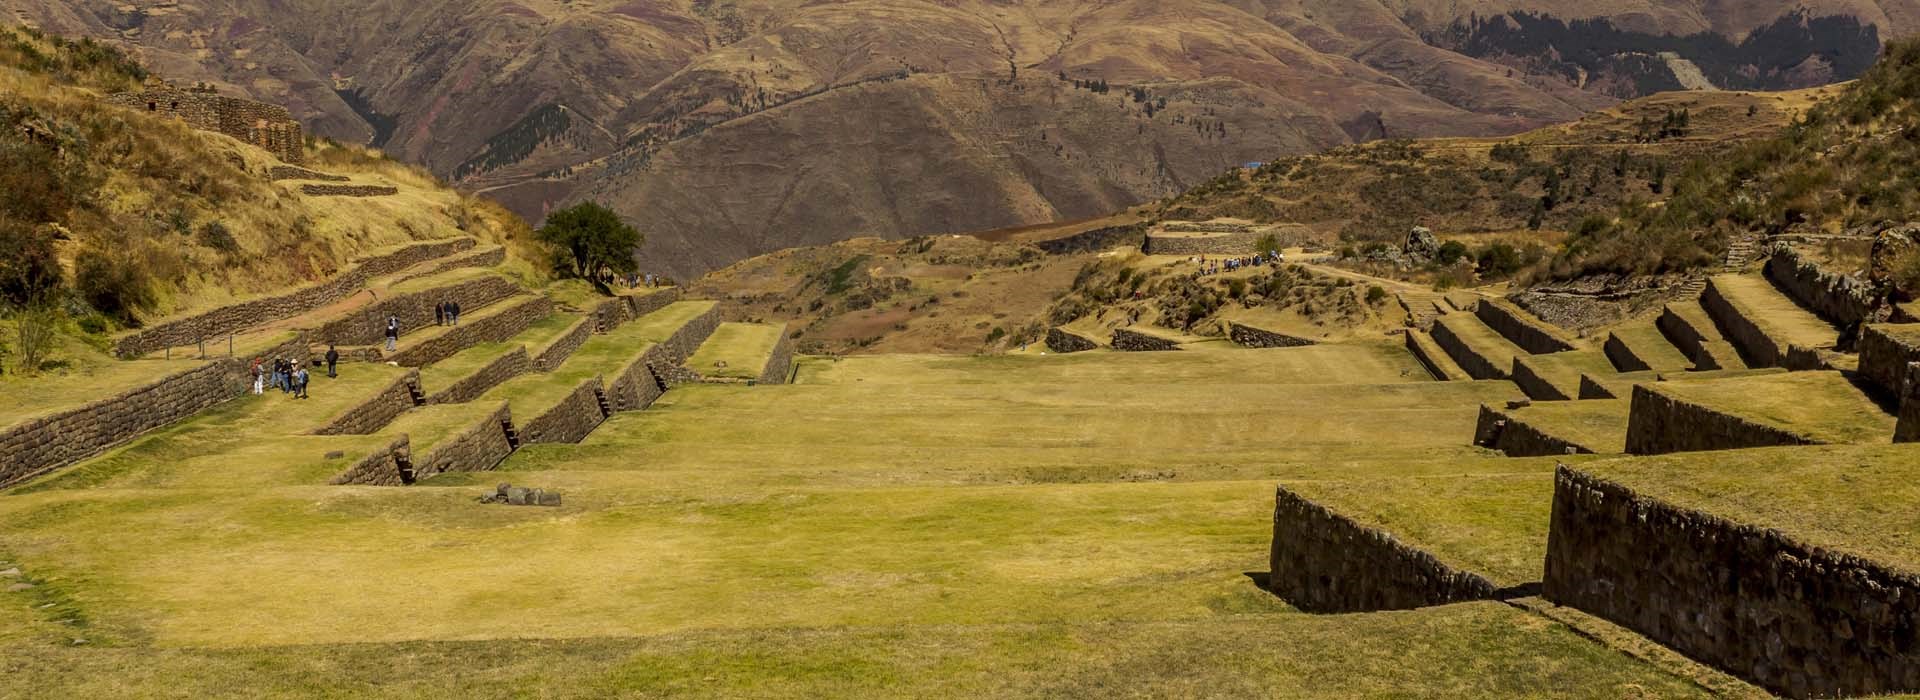 Visiter Tipon - Pérou